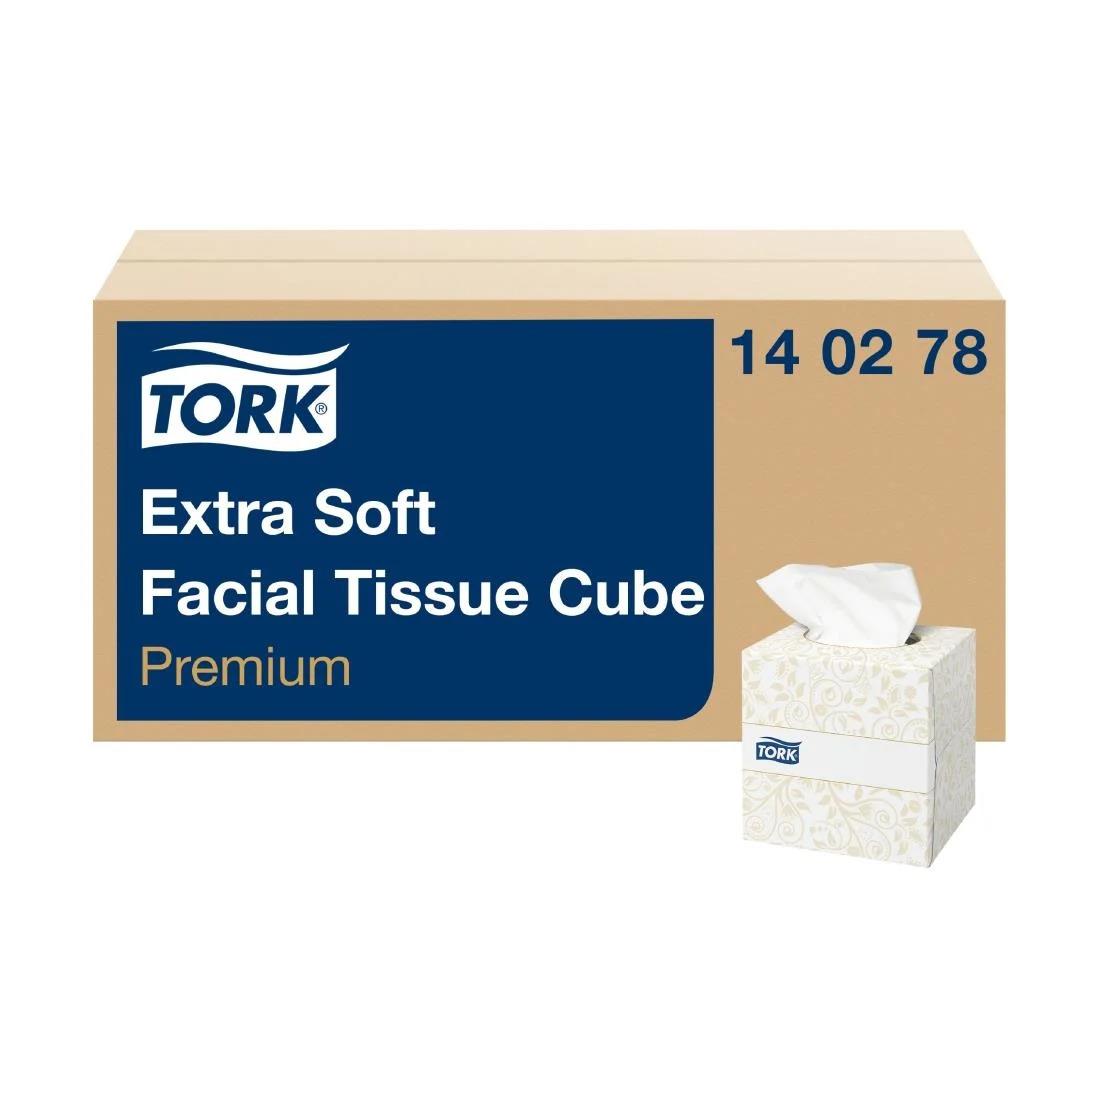 cube box of facial tissues